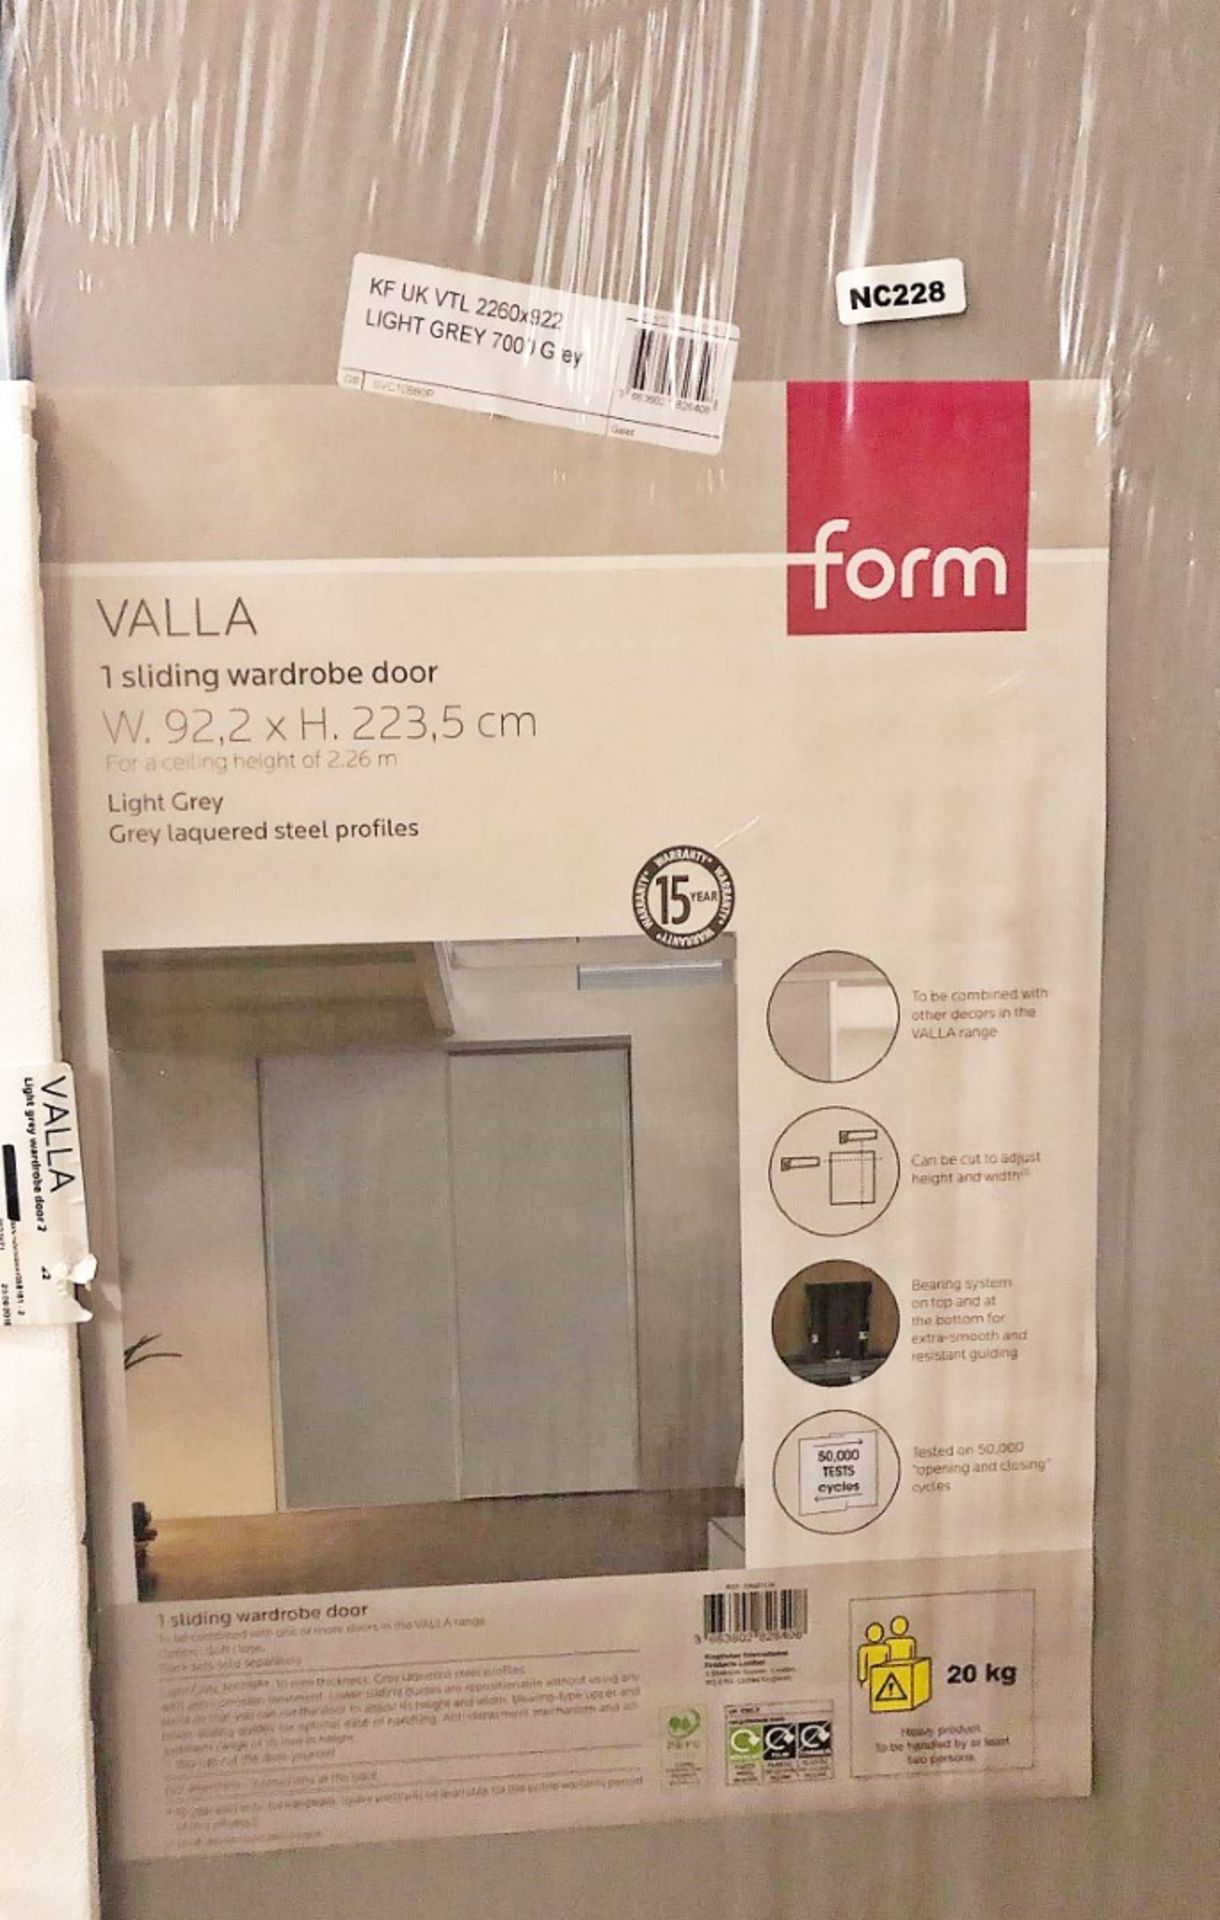 2 x VALLA 1 Light Grey Sliding Wardrobe Door With Grey Lacquered Steel Profiles - CL373 - Ref: NC200 - Bild 7 aus 7